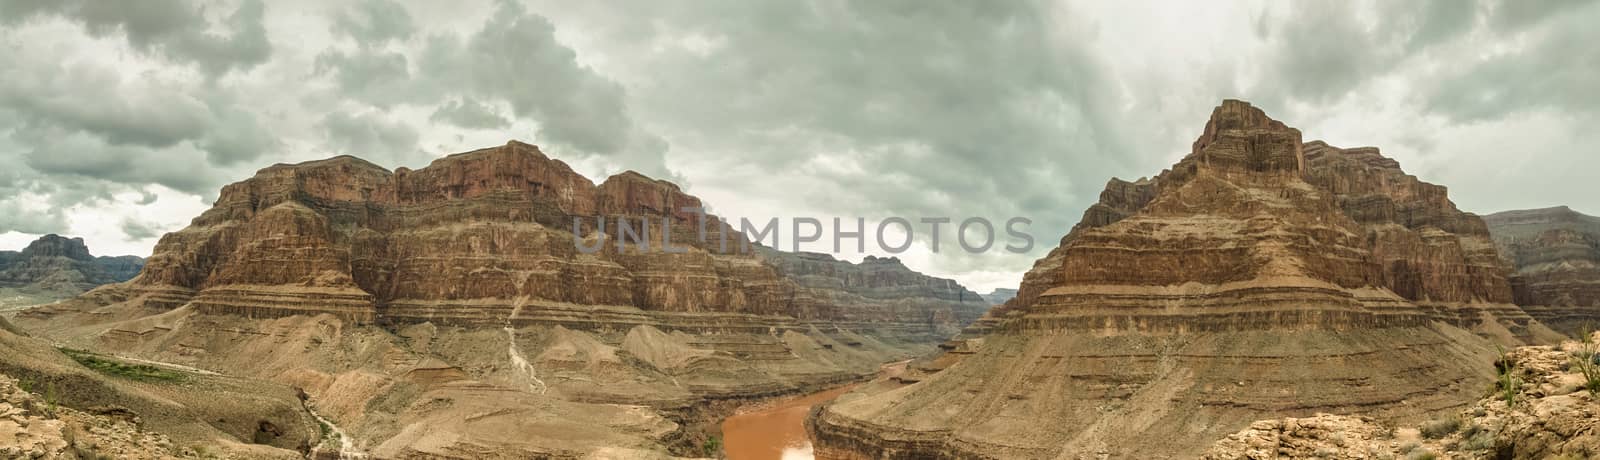 Grand Canyon Panorama USA, Nevada by weltreisendertj